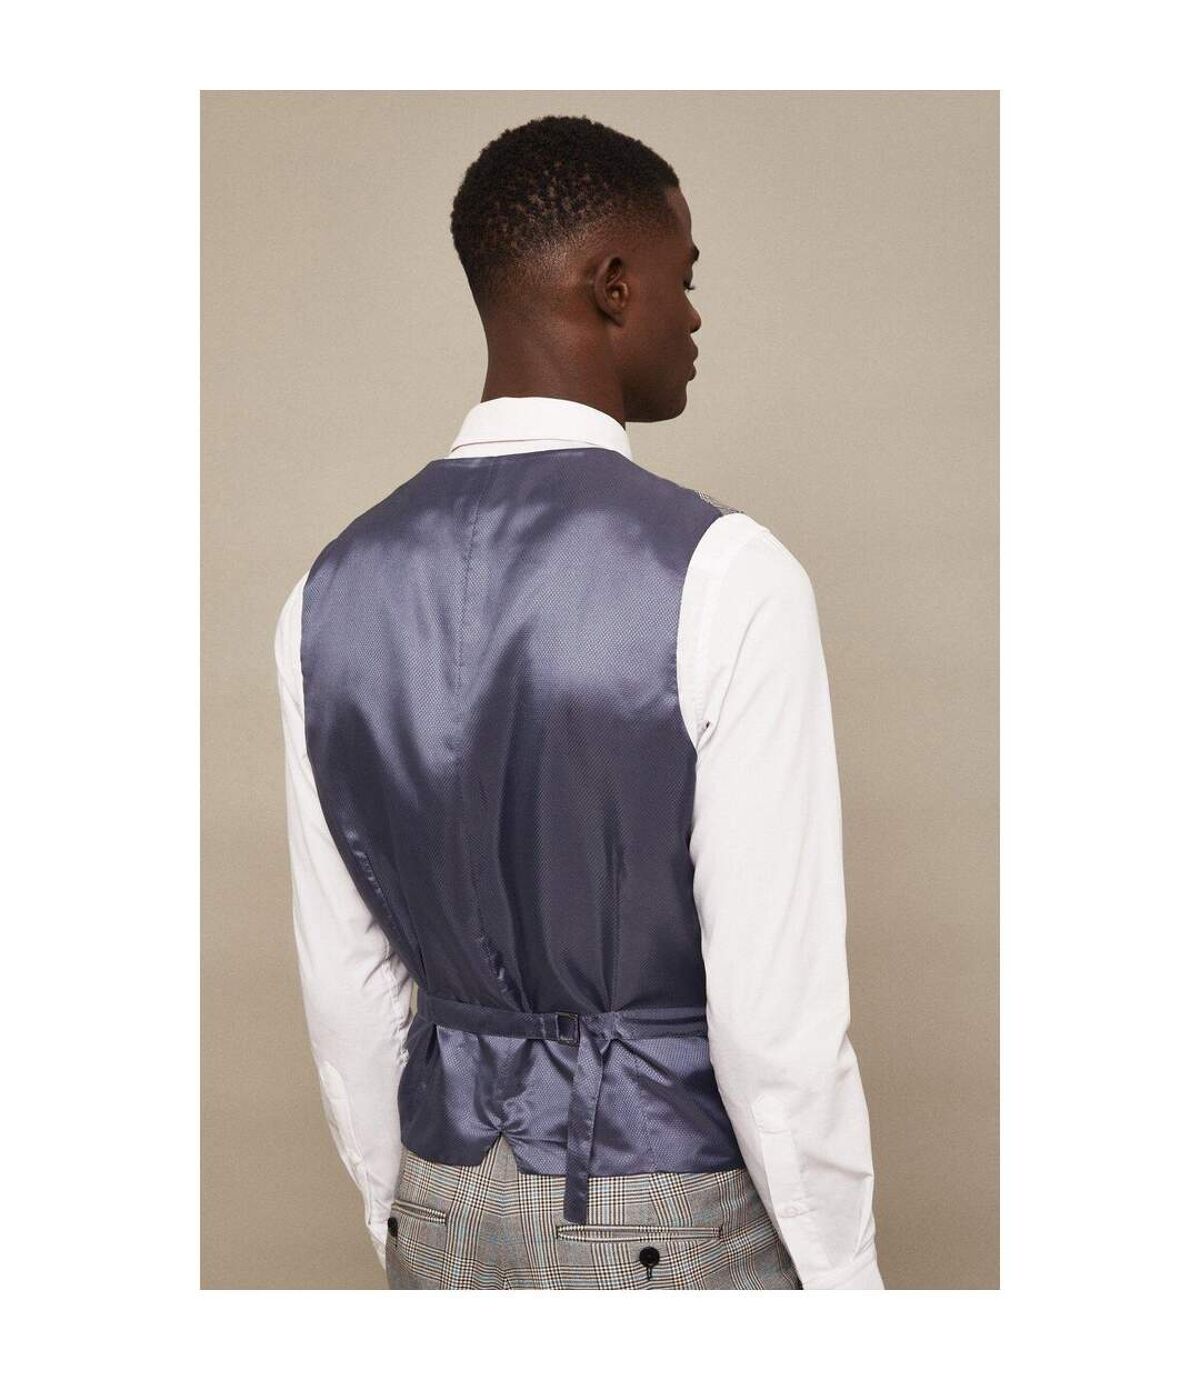 Burton Mens Highlight Checked Slim Vest (Gray)